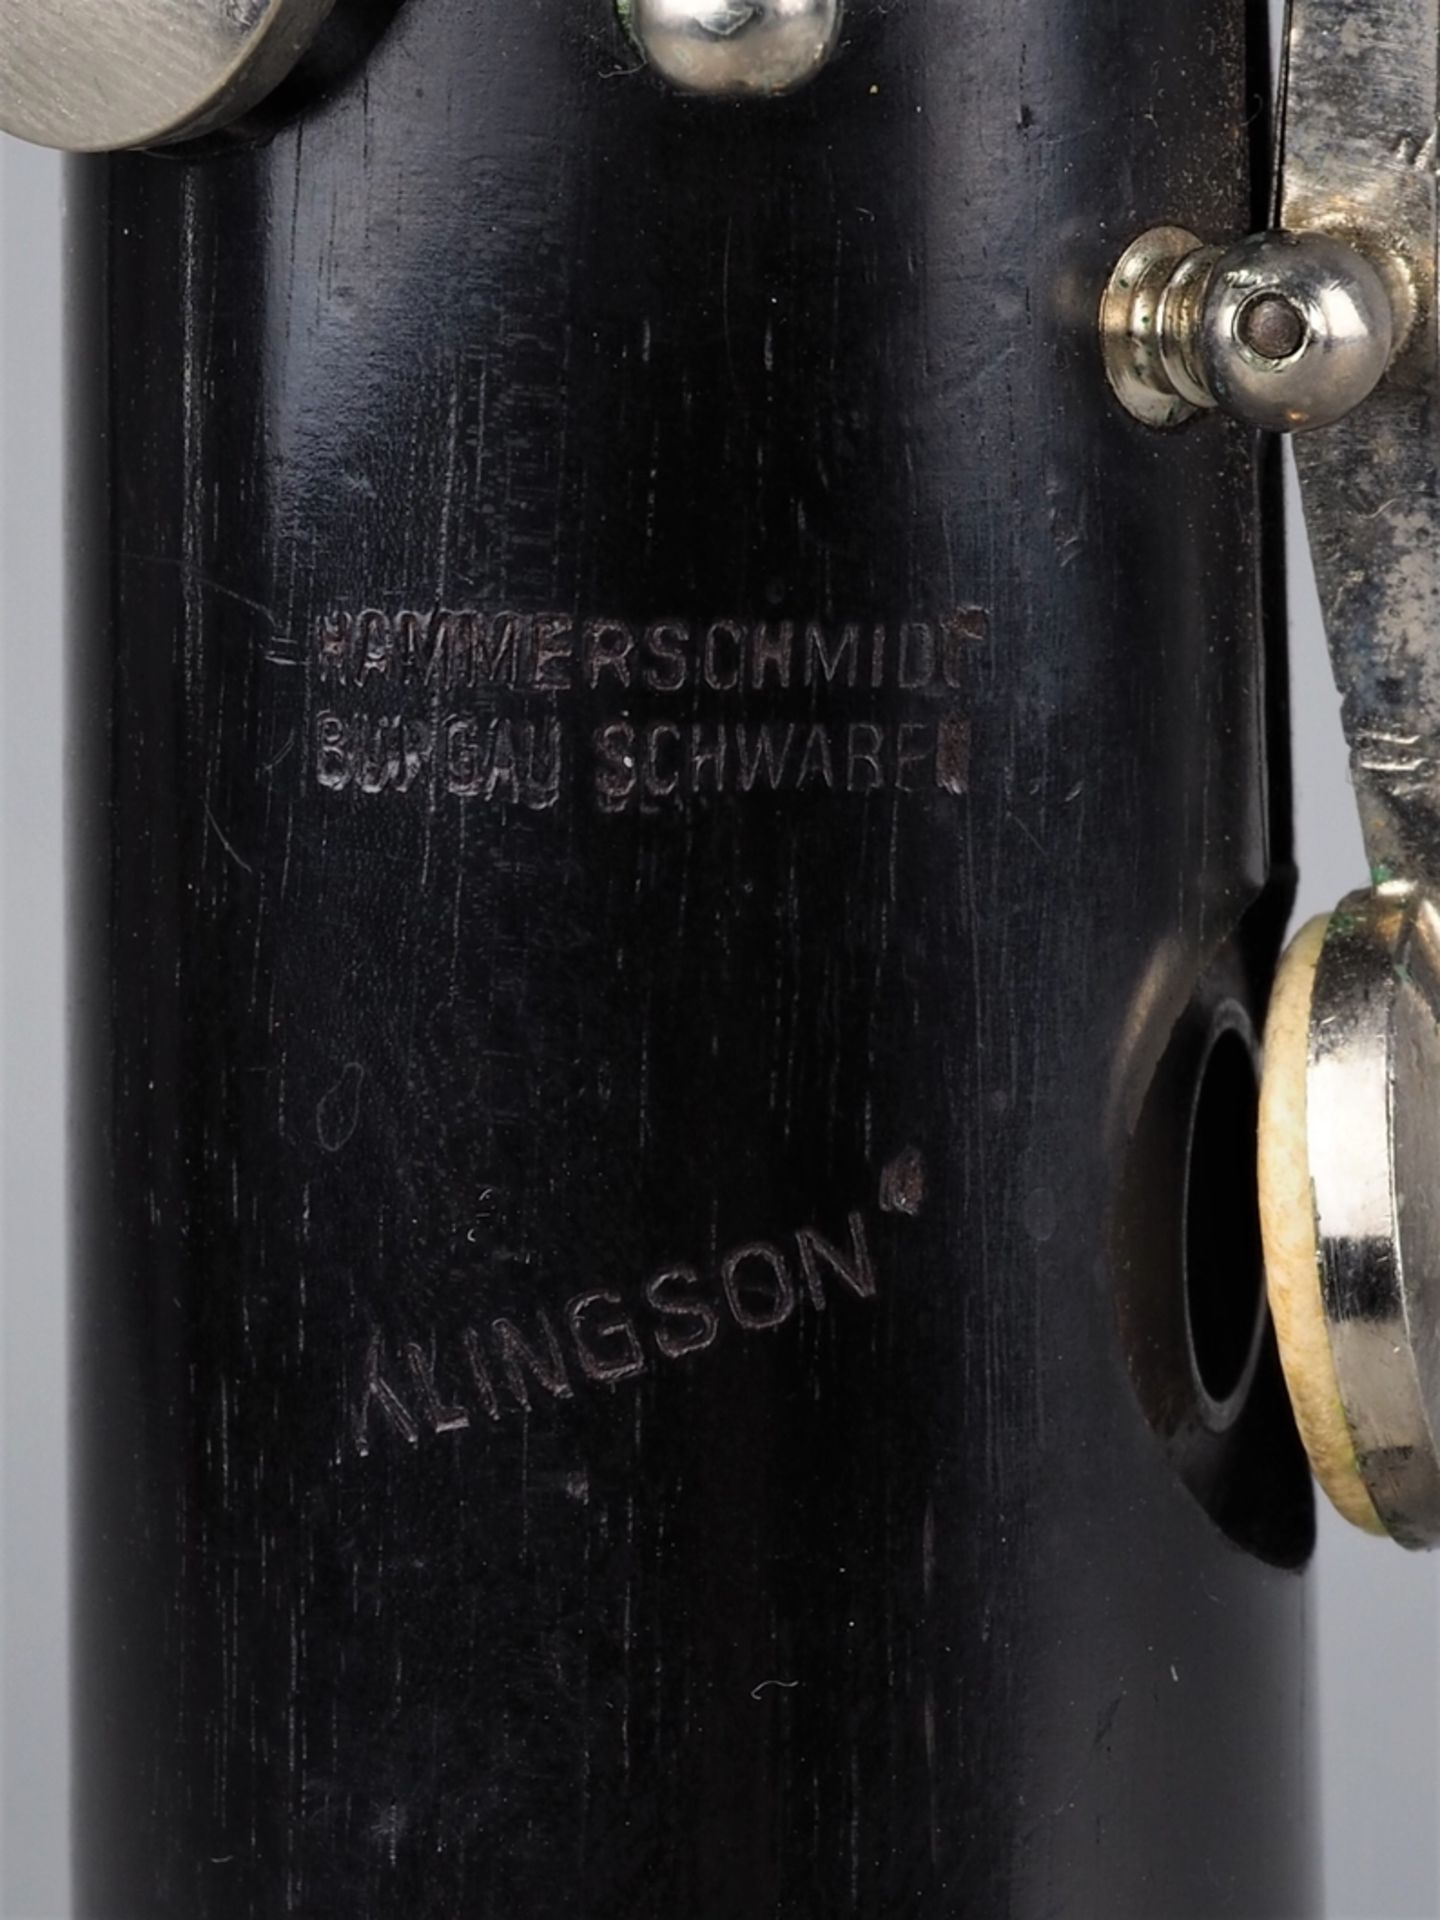 Bb clarinet "Karl Hammerschmid Klingson". - Image 3 of 3